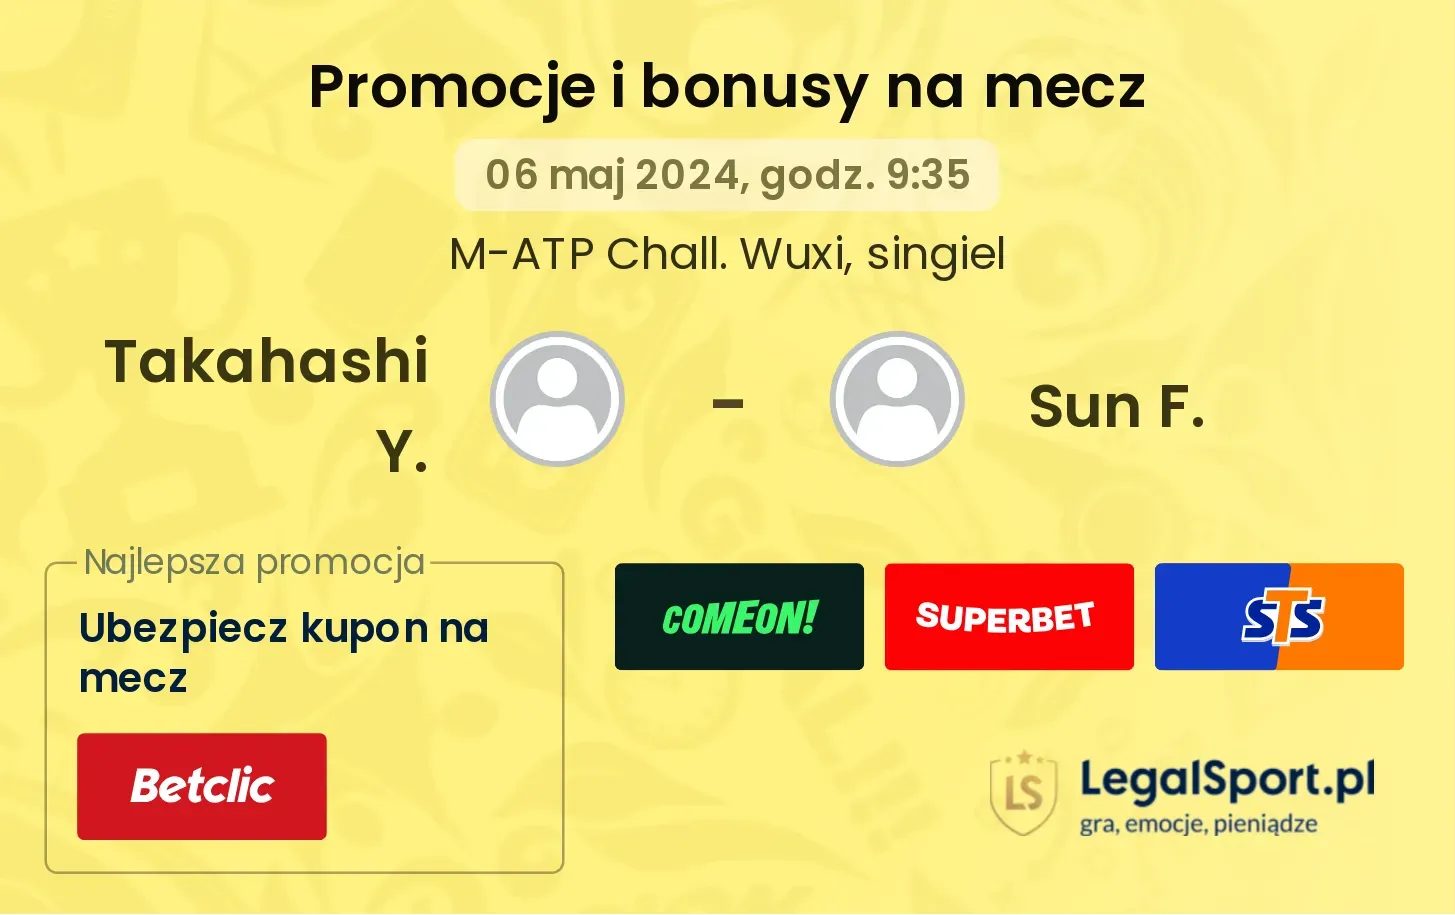 Takahashi Y. - Sun F. promocje bonusy na mecz